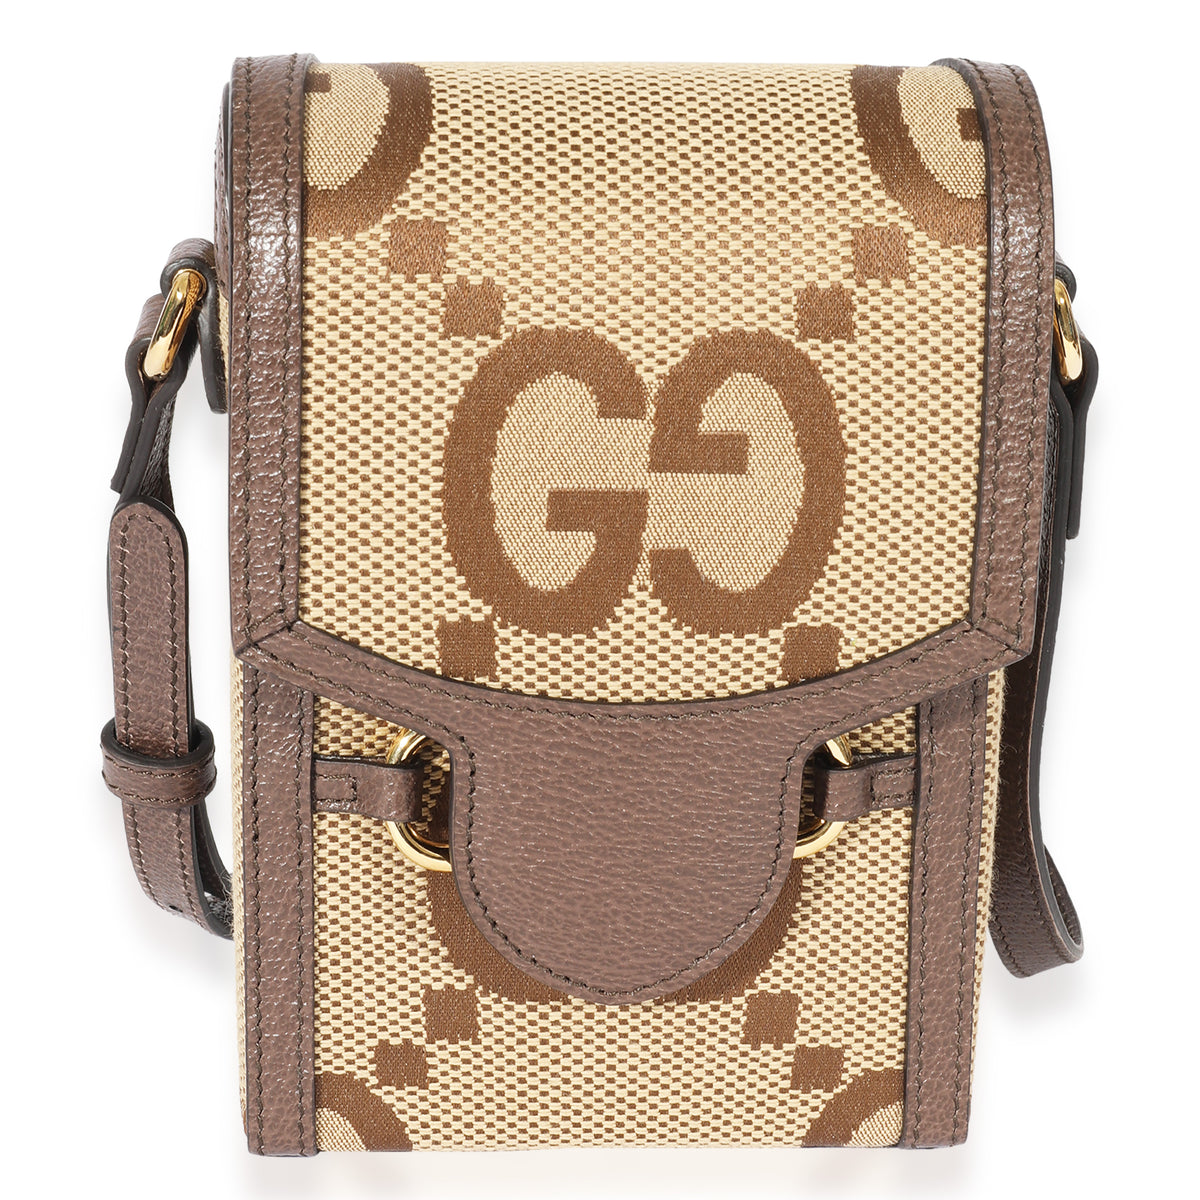 Jumbo GG messenger bag in camel and ebony GG canvas